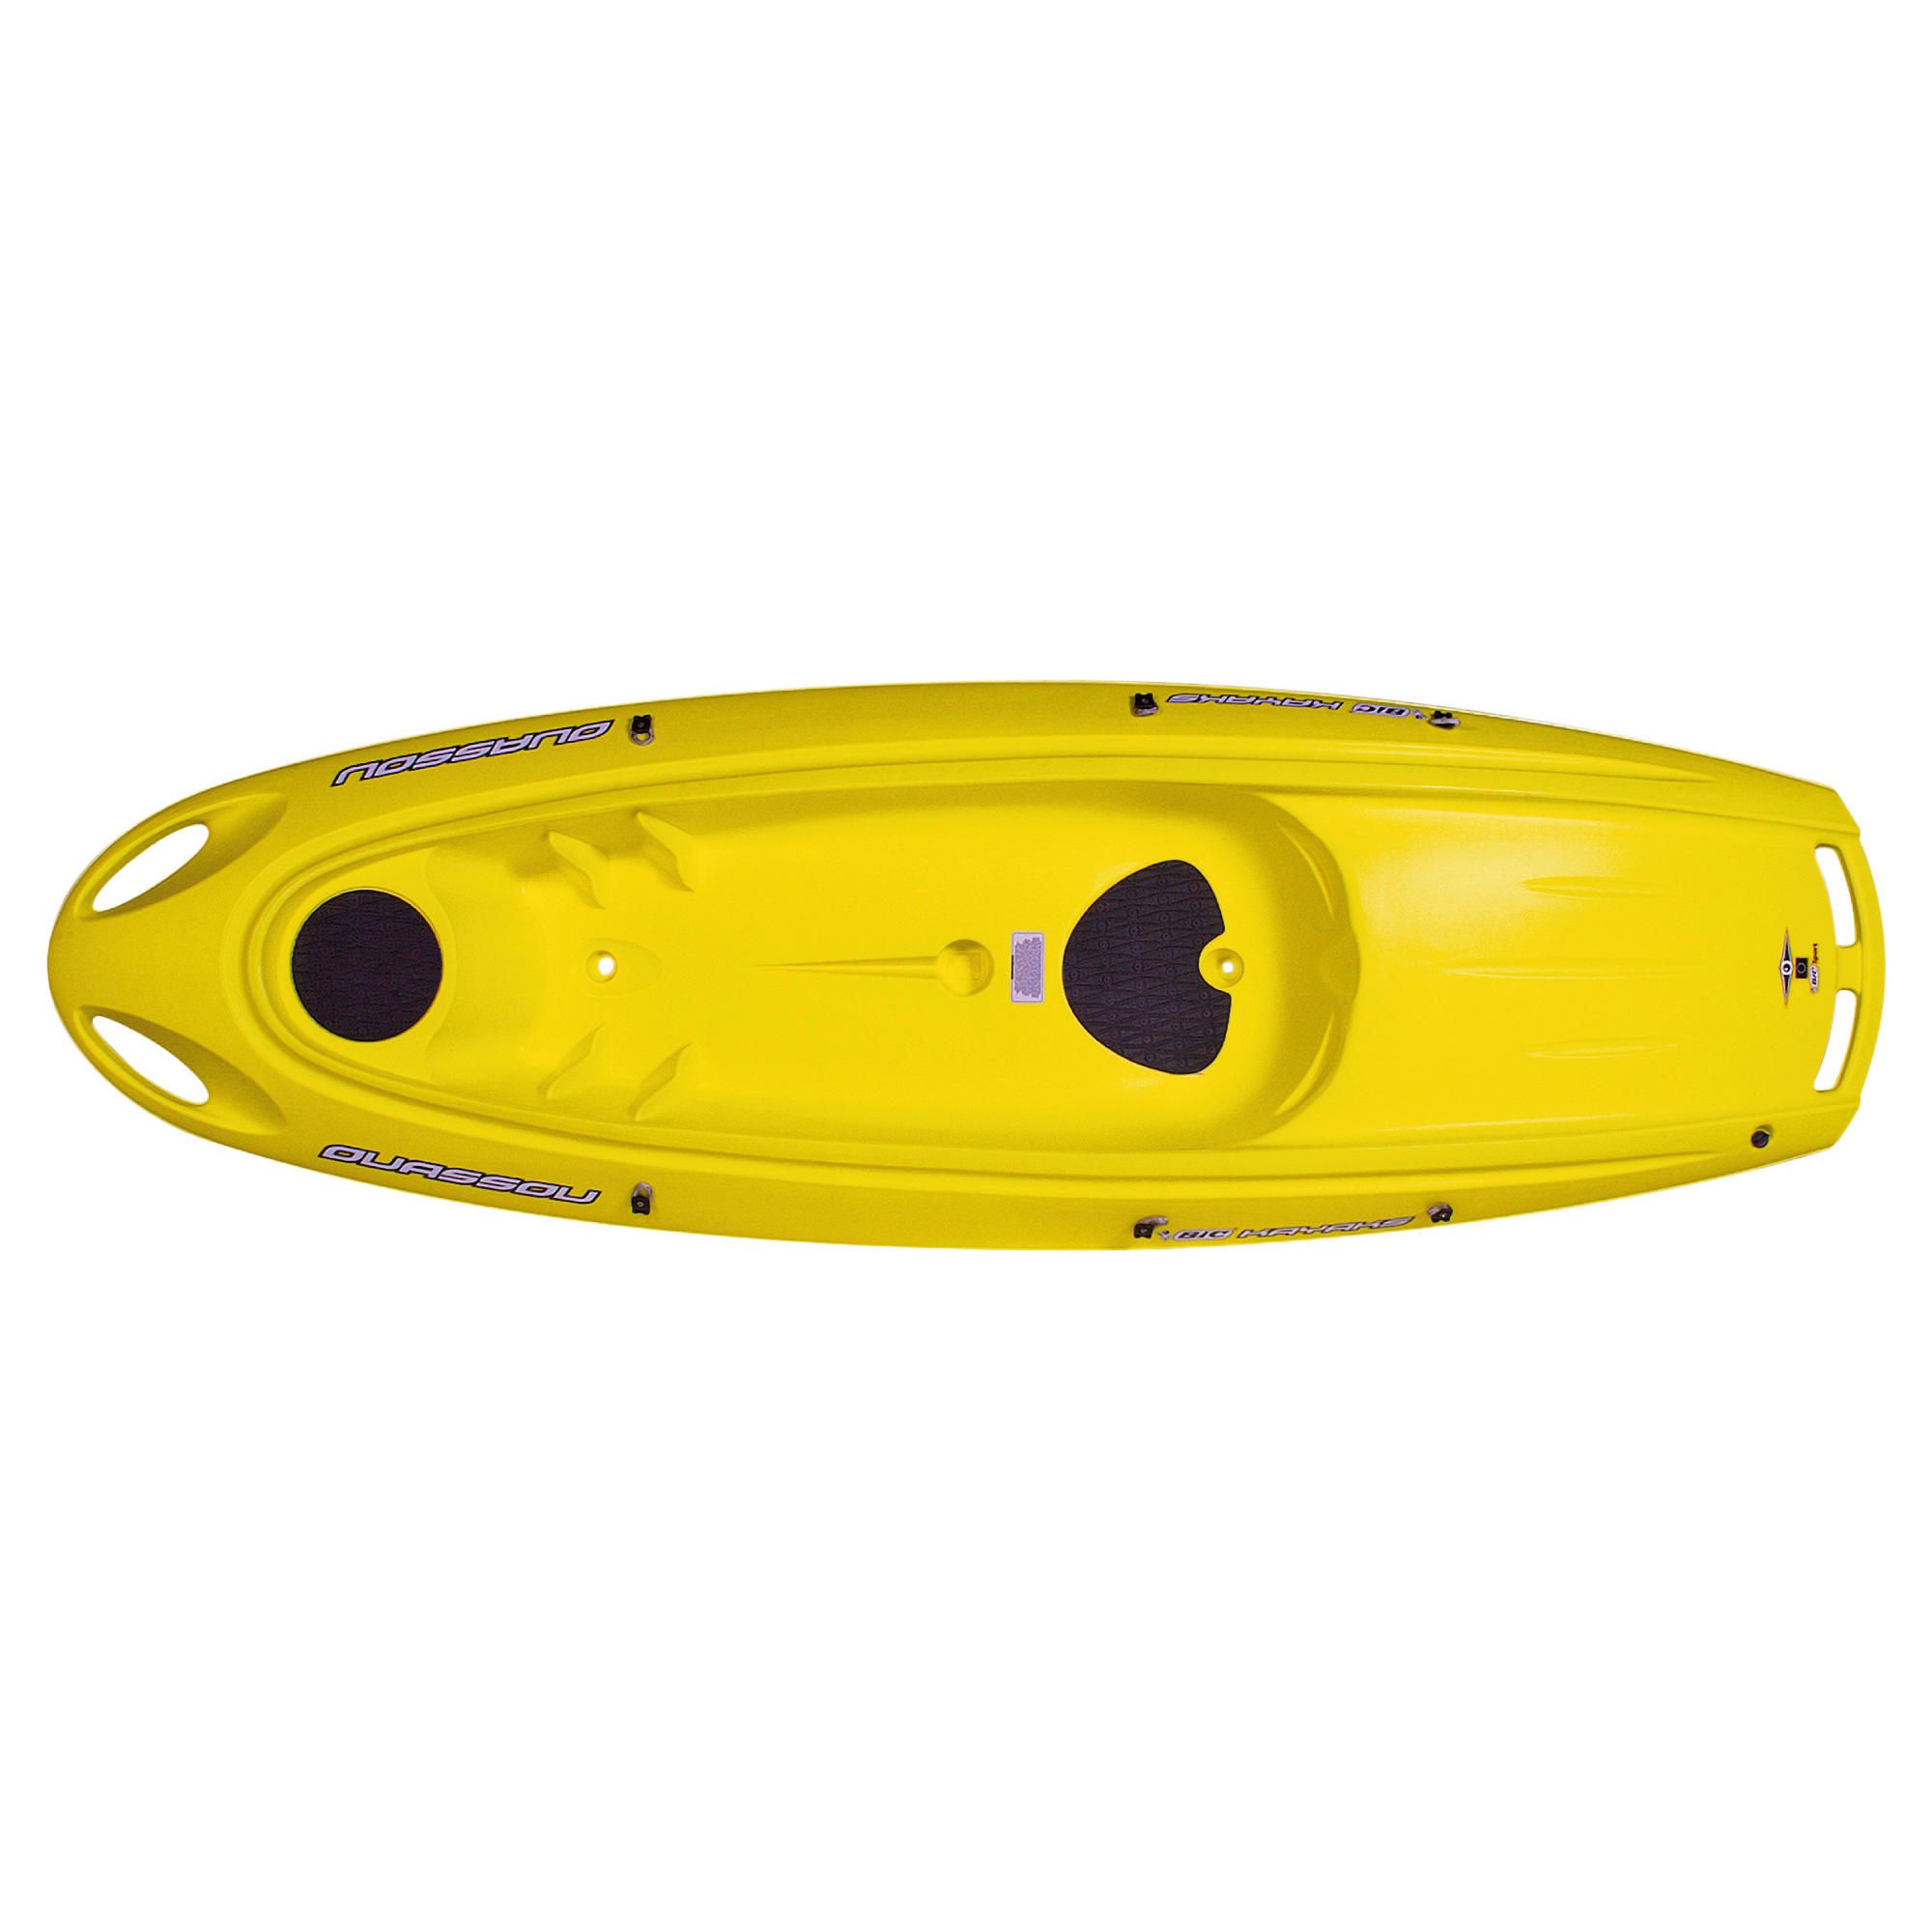 Bic Ouassou 1 Man Sit-On-Top Kayak Yellow at Tesco Direct